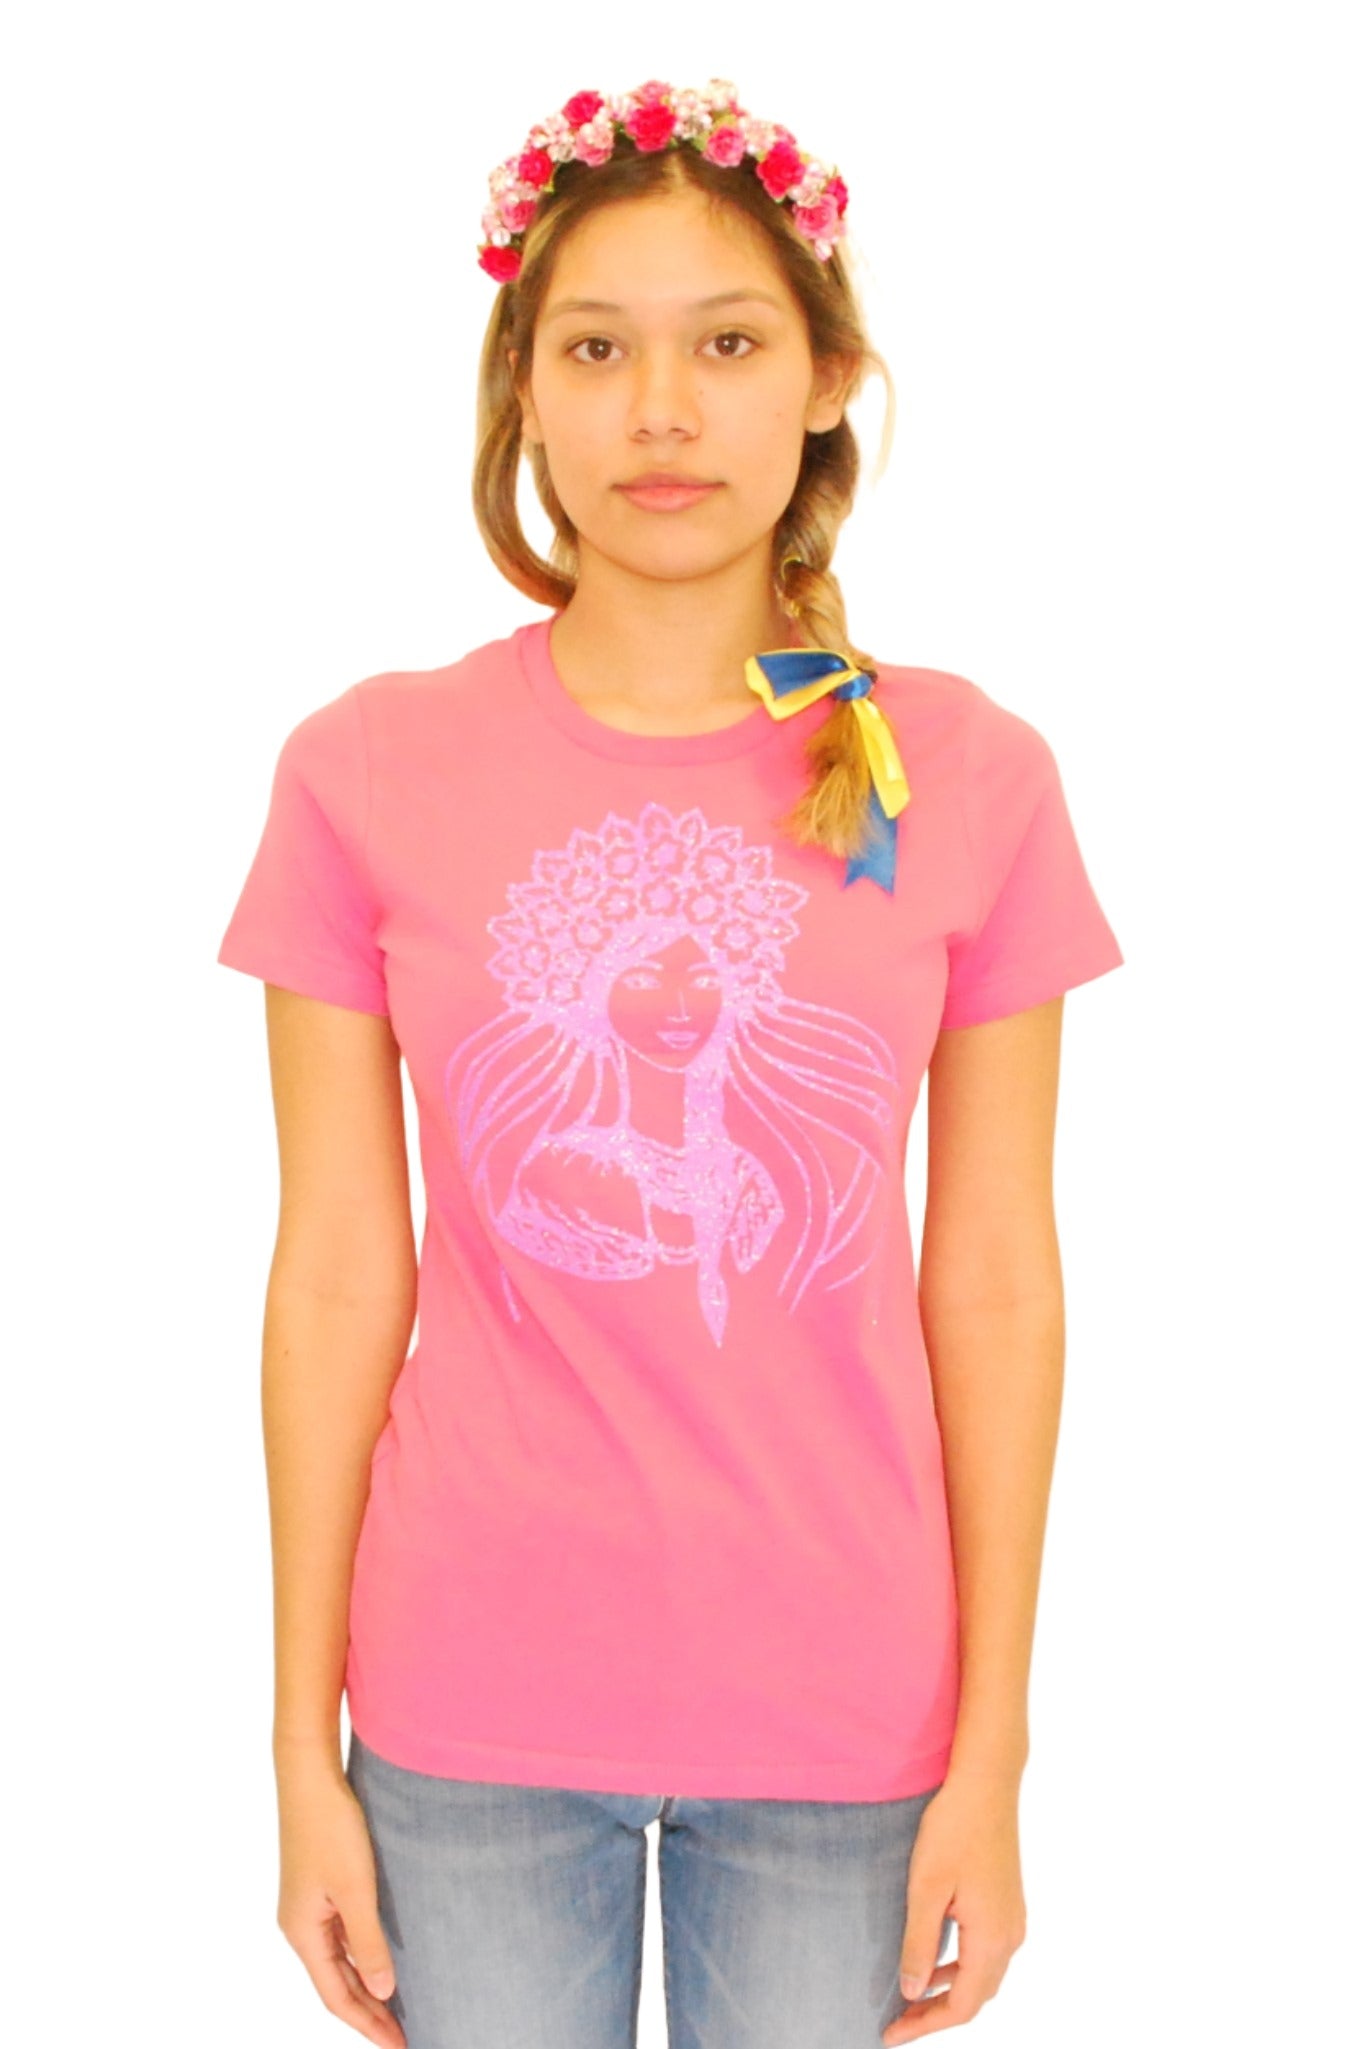 Women's t-shirt "Krasa" pink